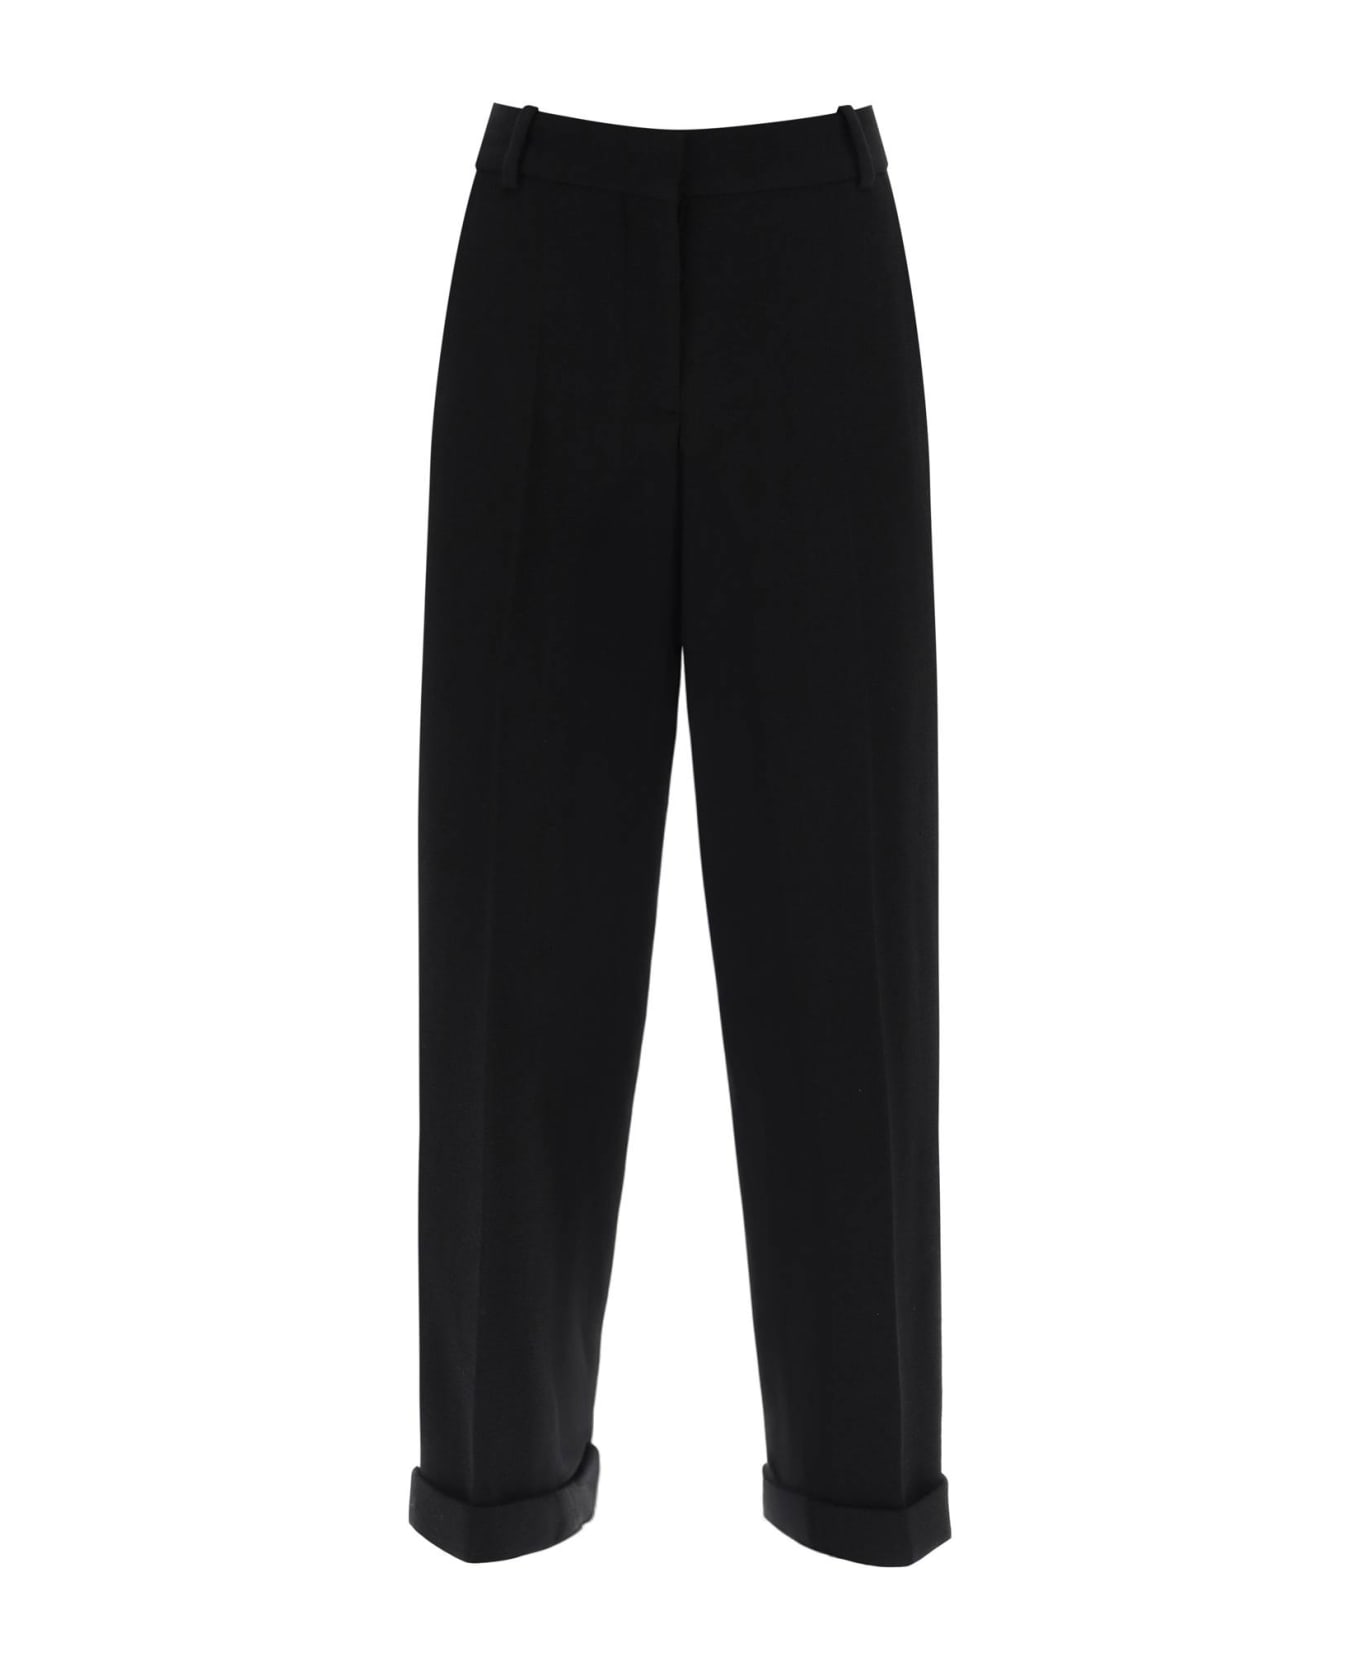 Balmain Cuffed Wool Crepe Trousers - NOIR (Black) ボトムス